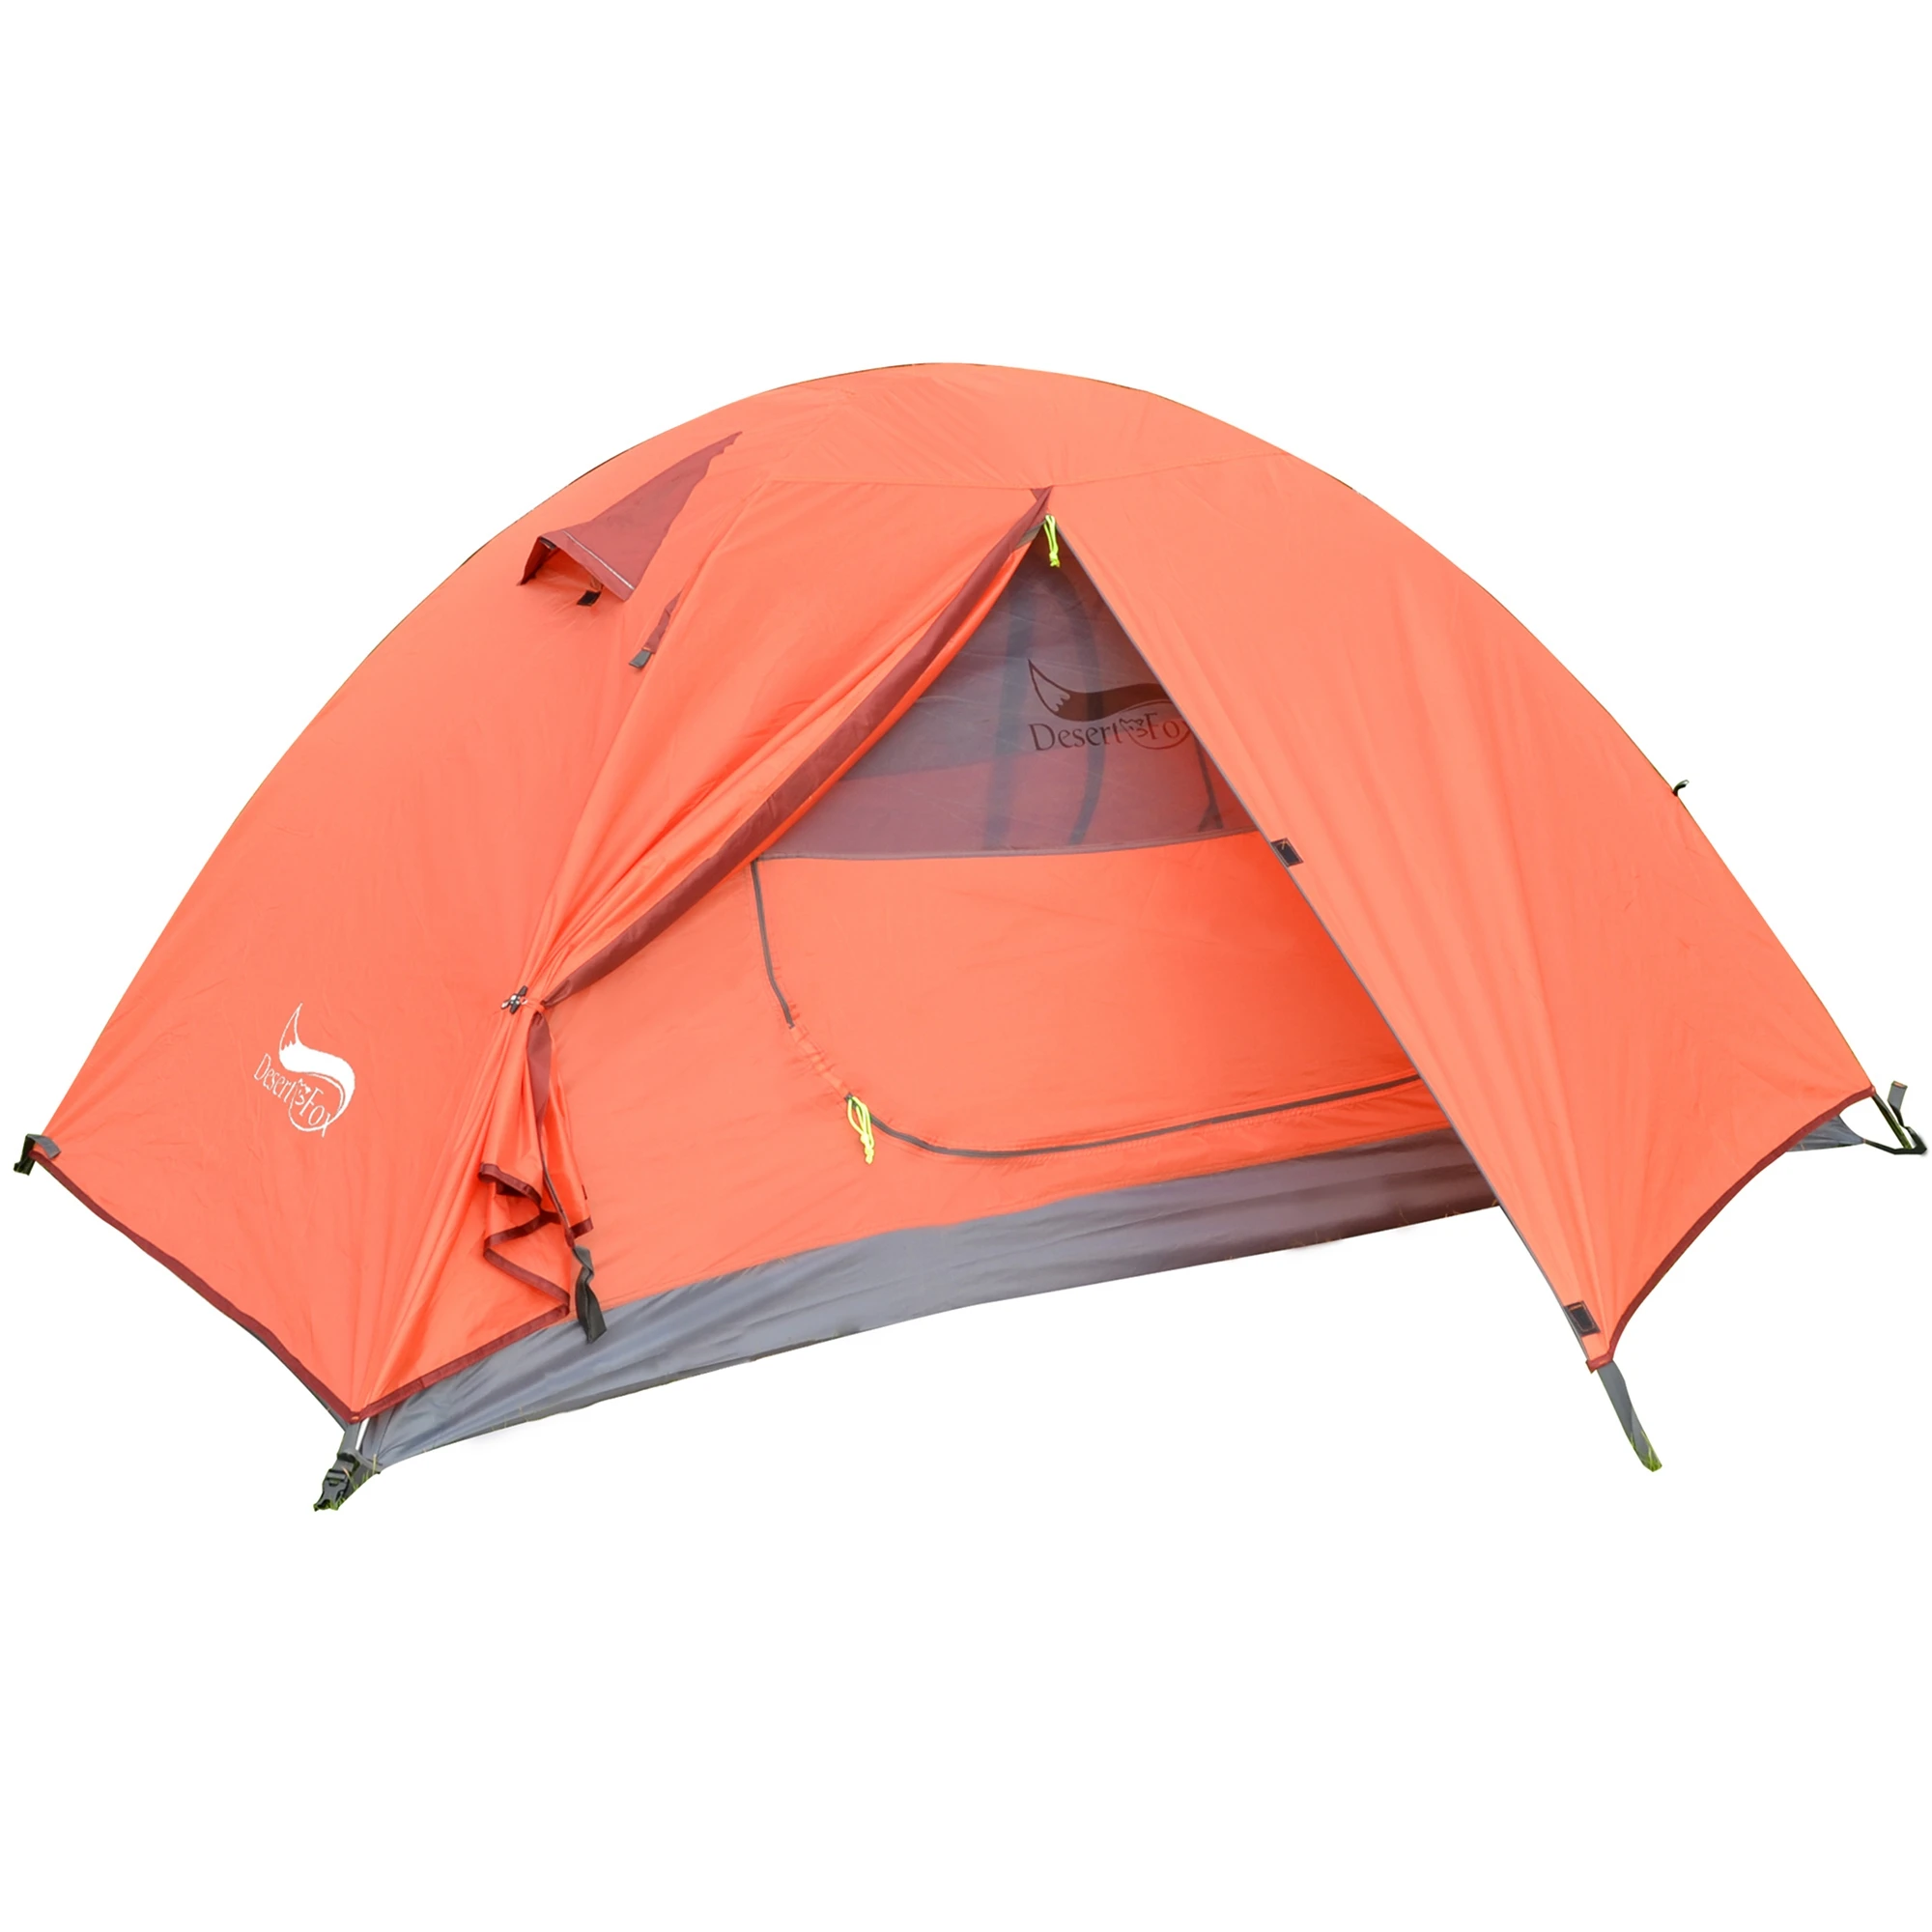 2 person tent orange